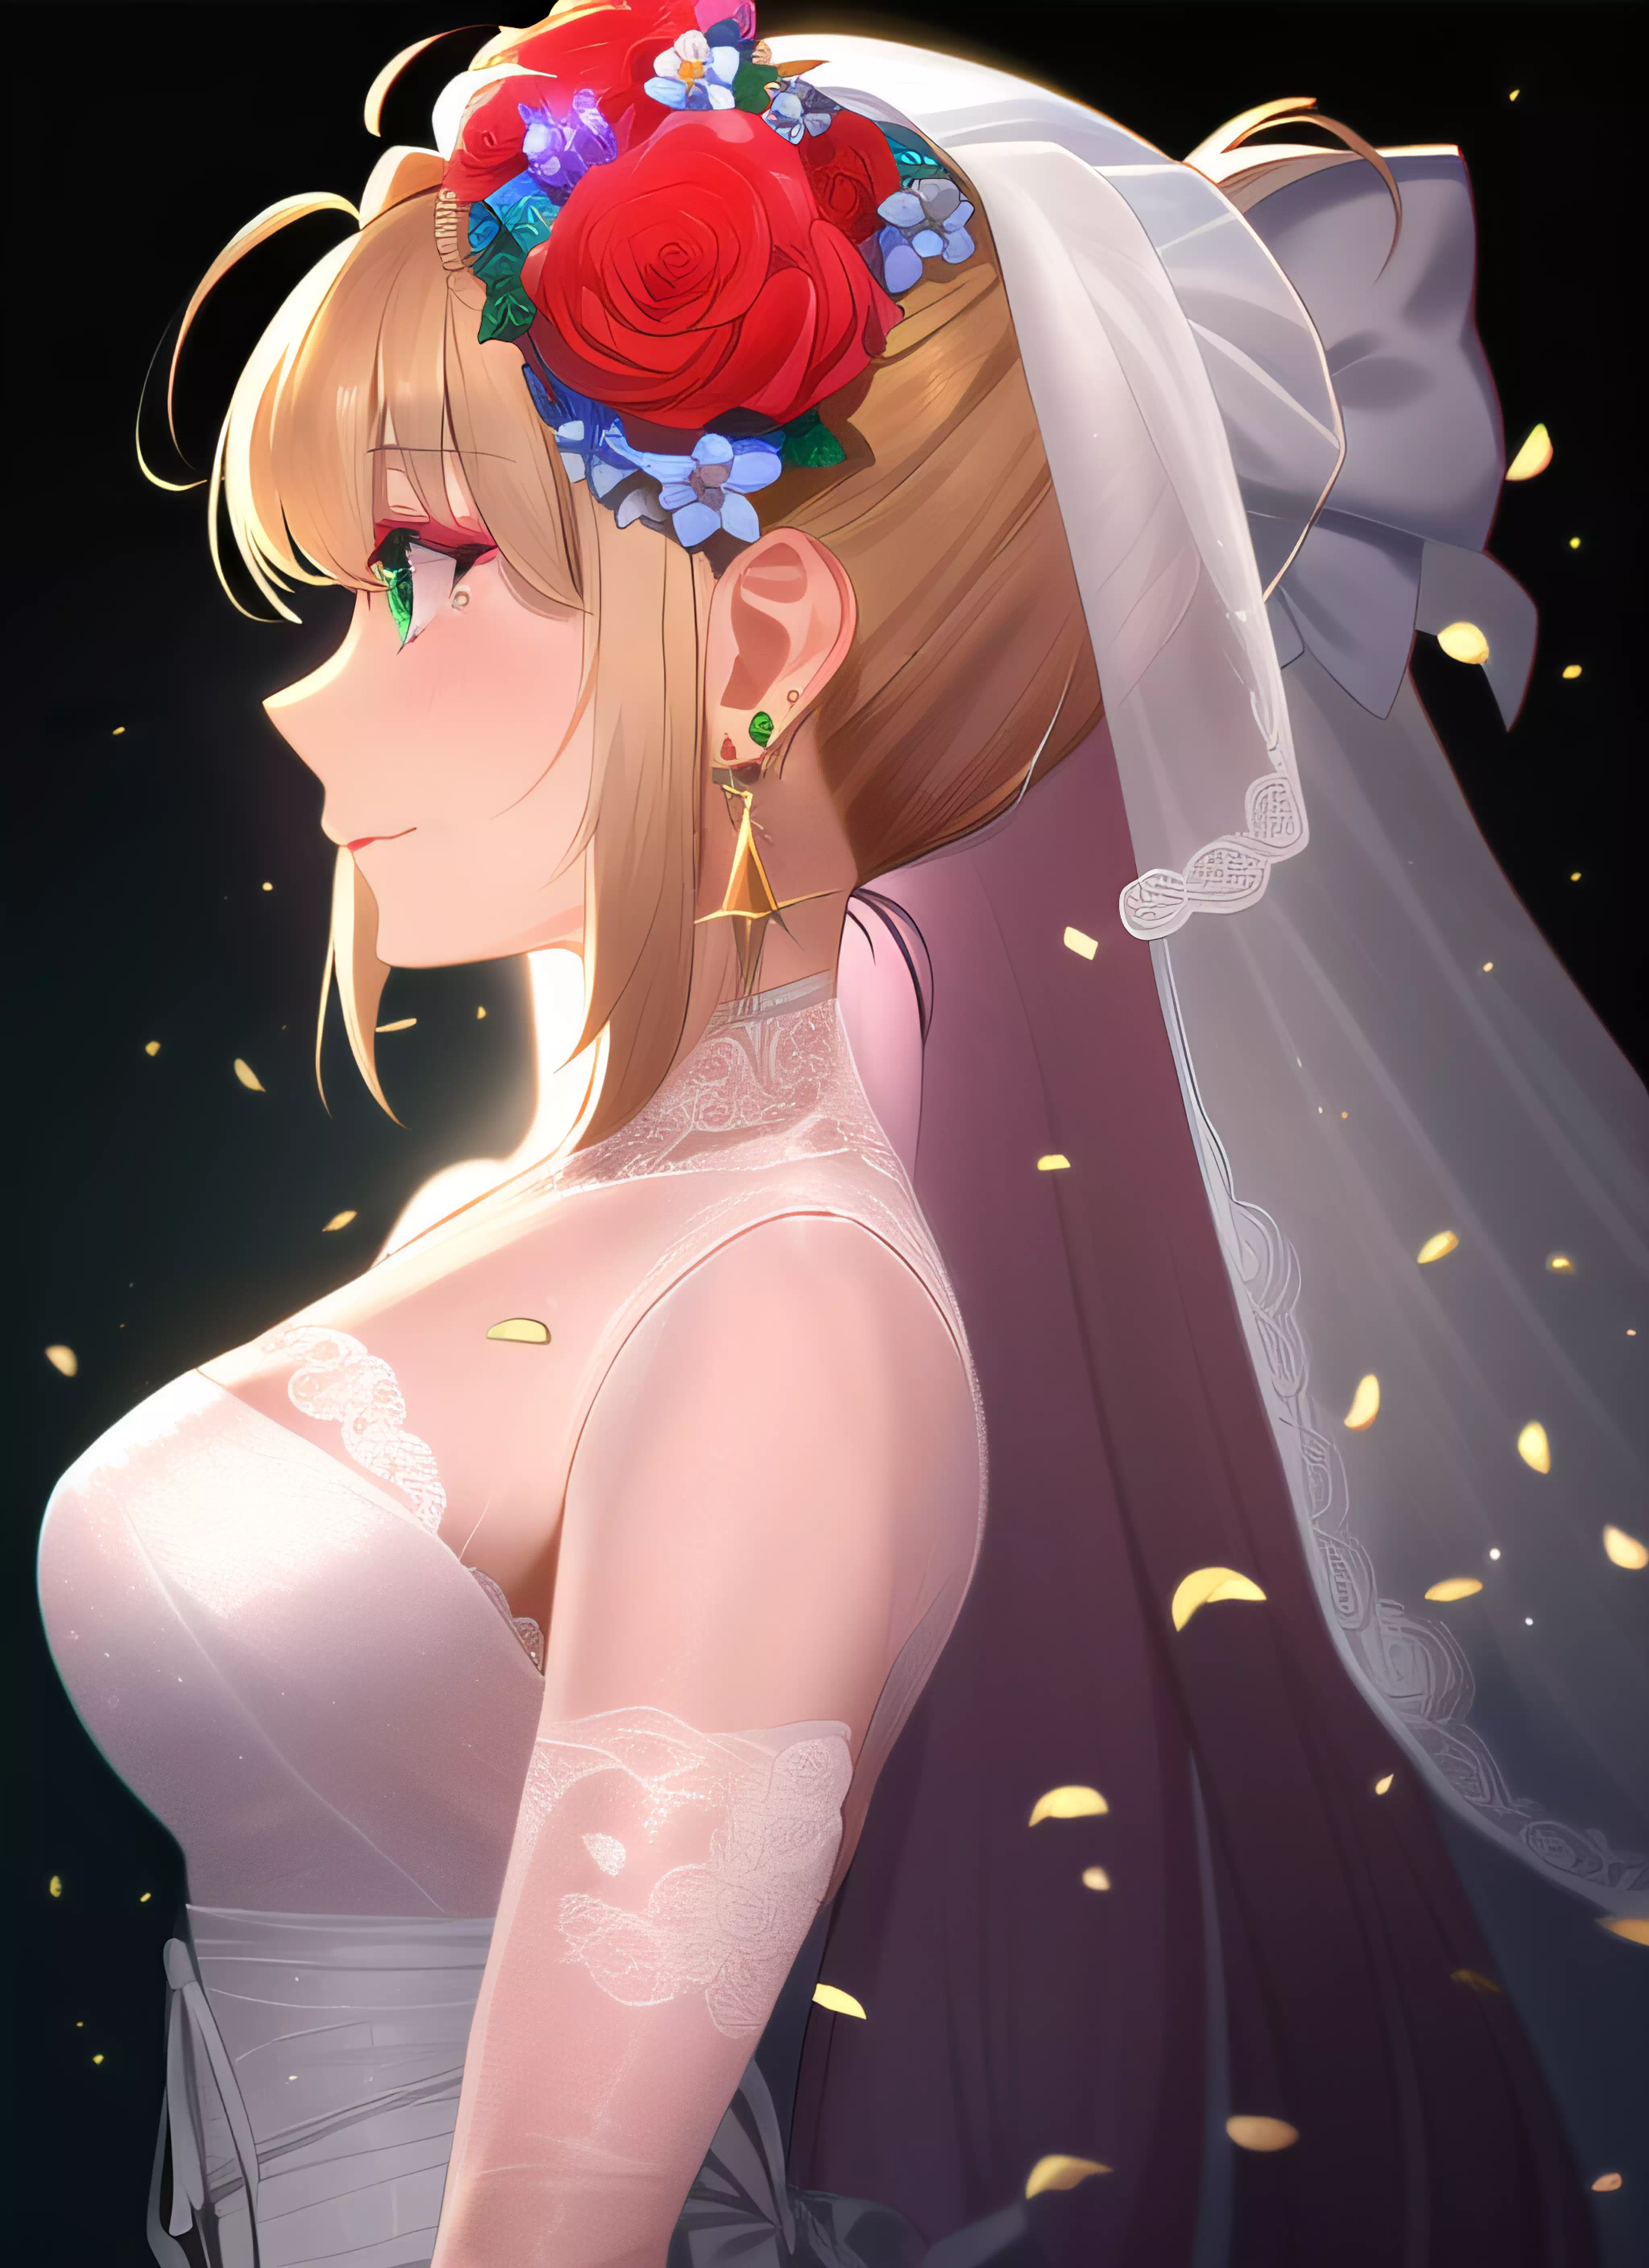 [AI] 花嫁 wedding